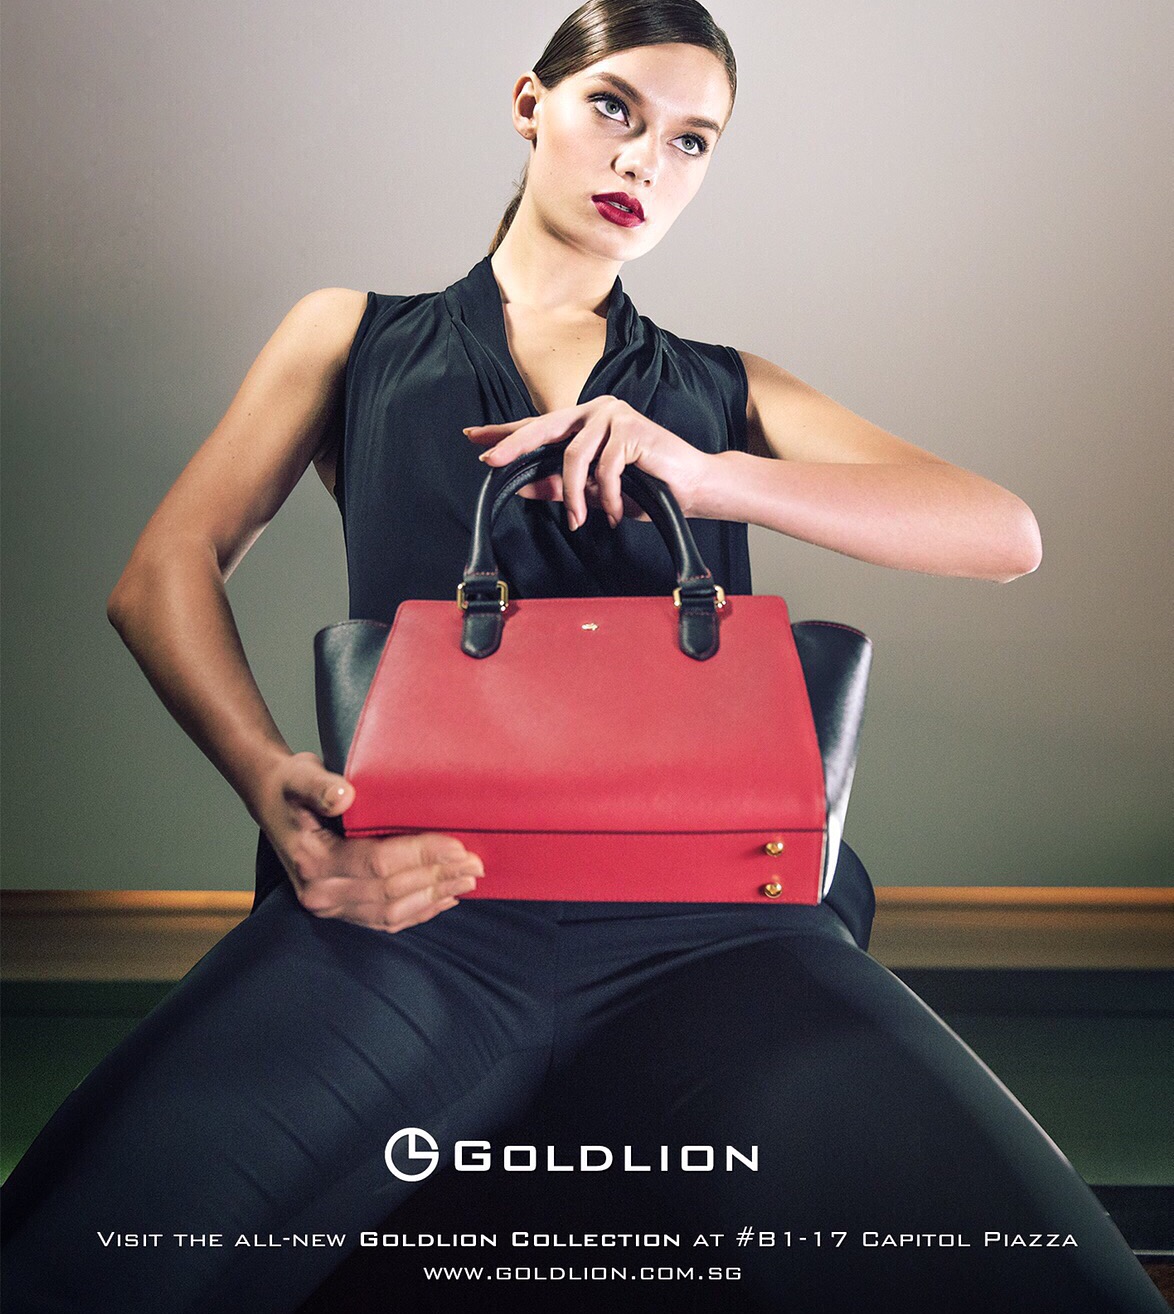 Goldlion re-branding Campaign 2